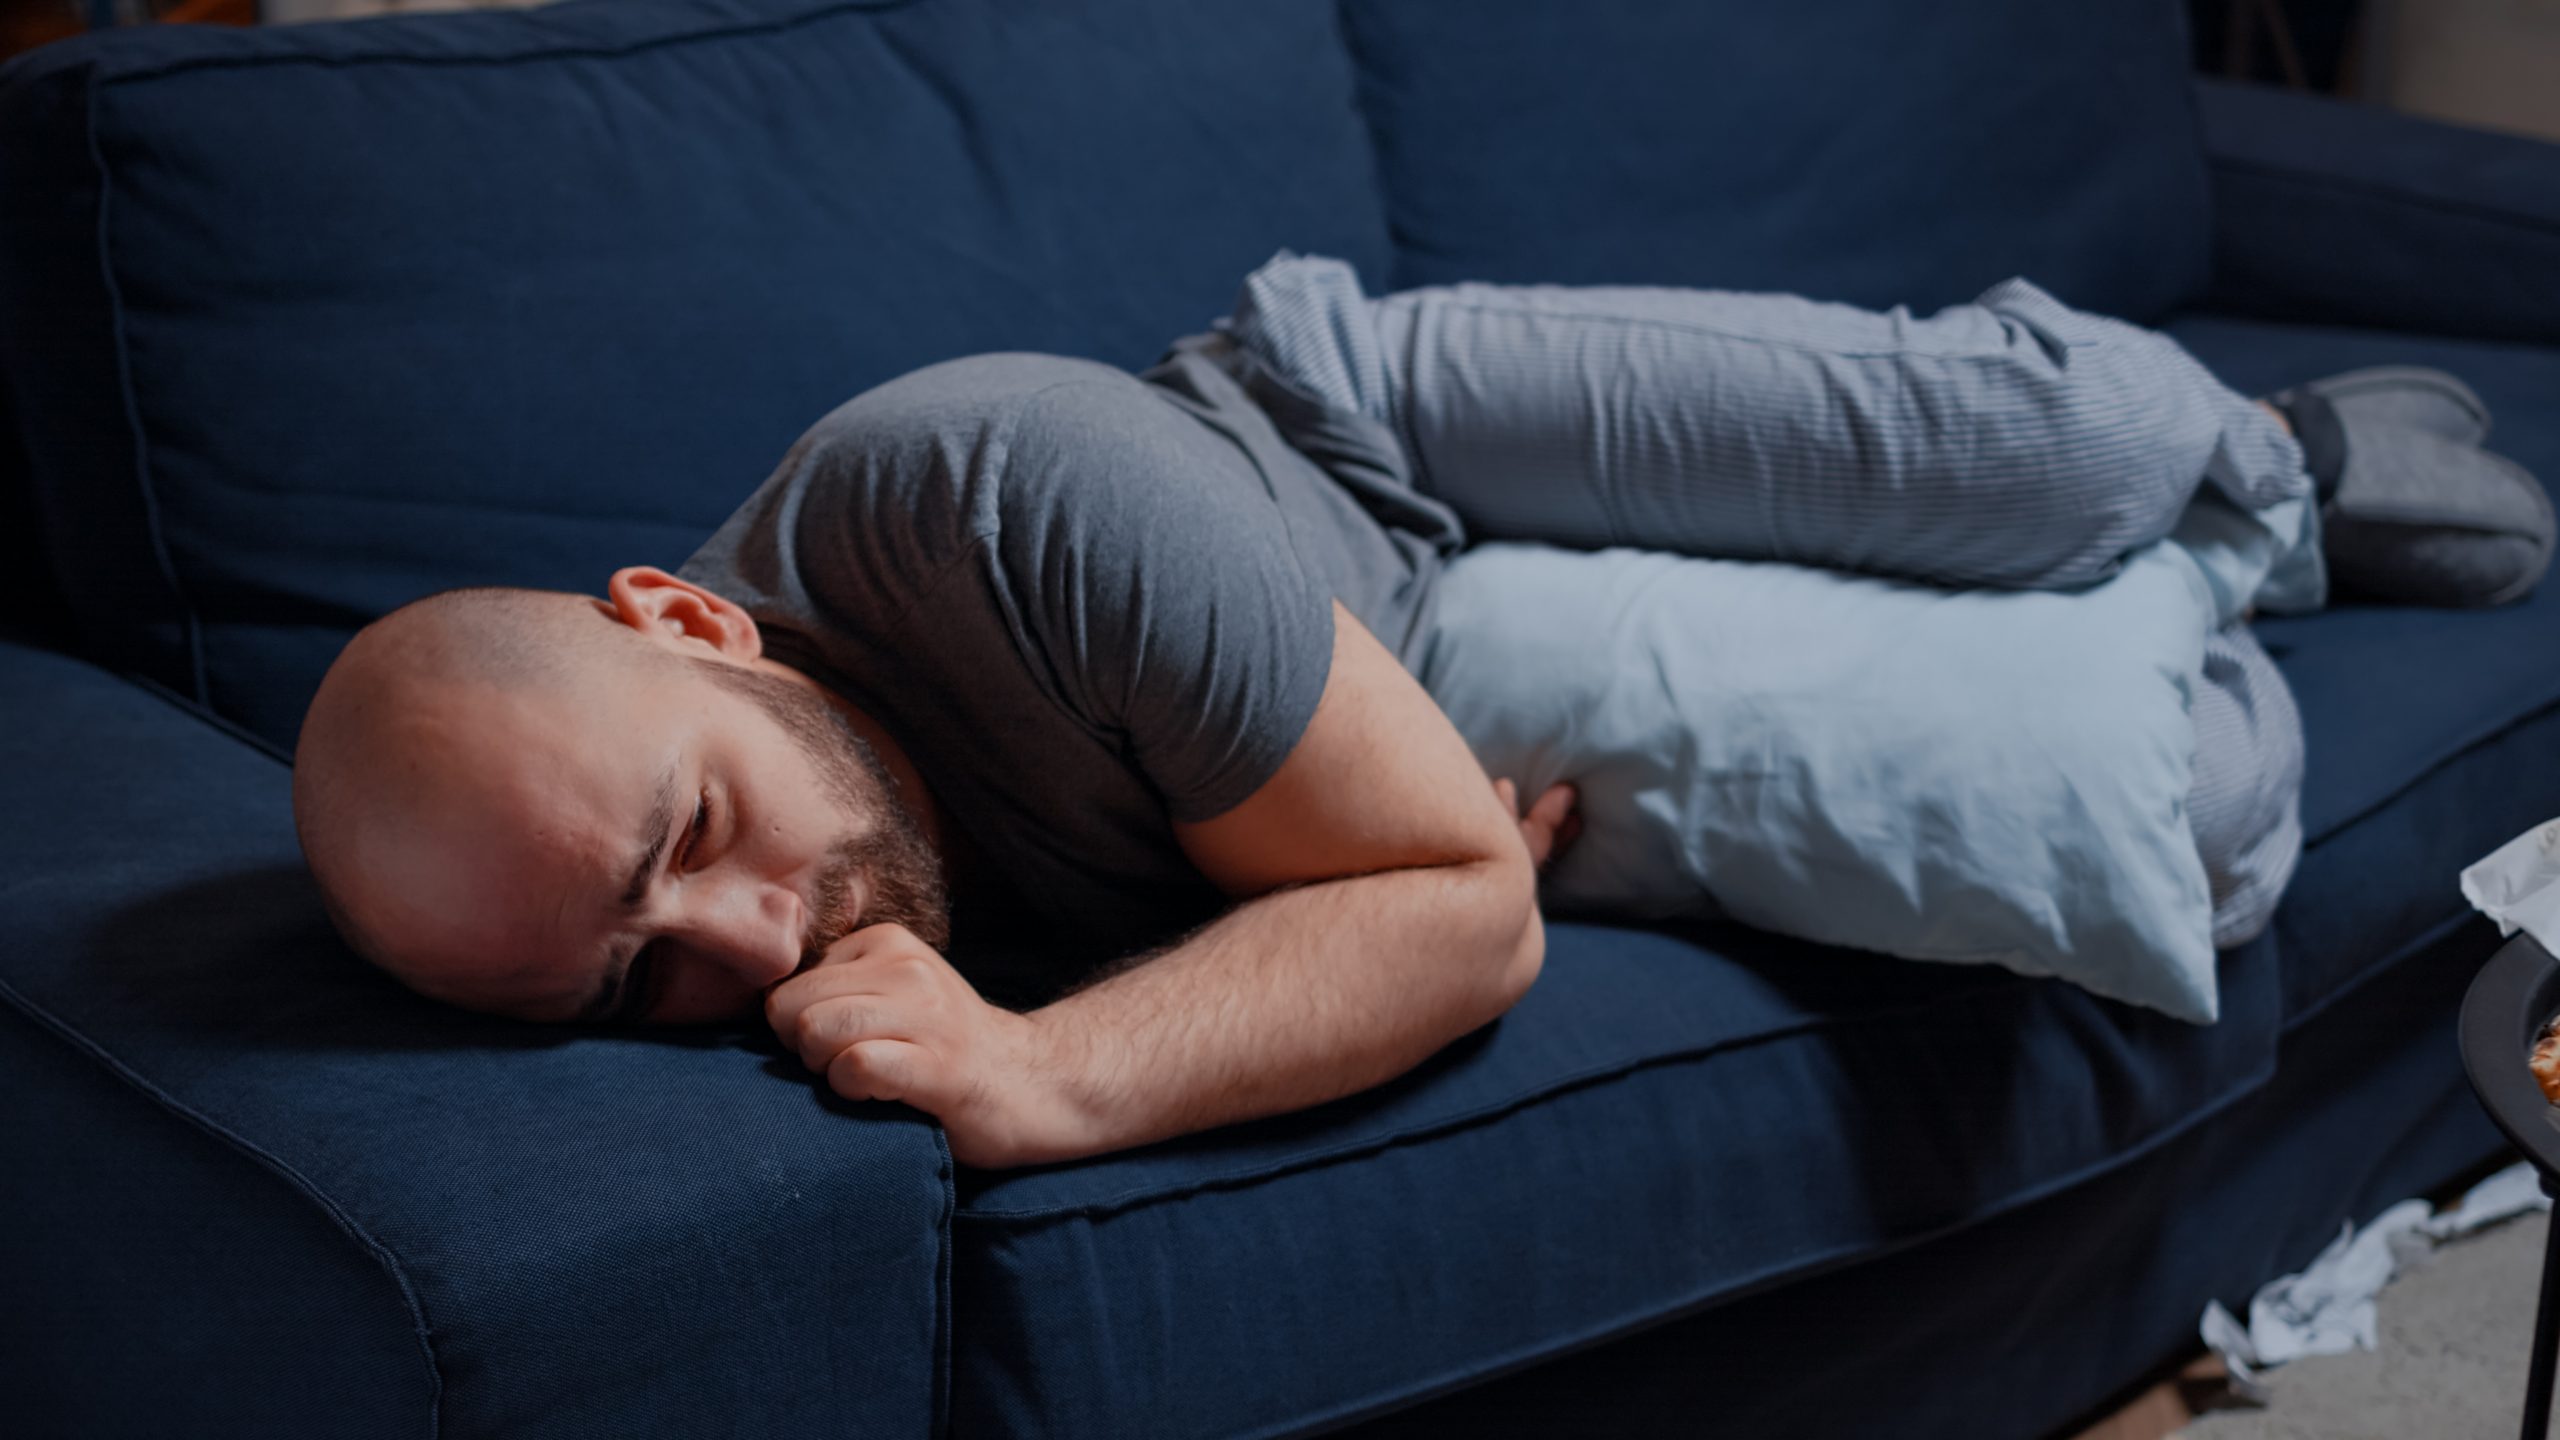 Sleep phase could heal PTSD